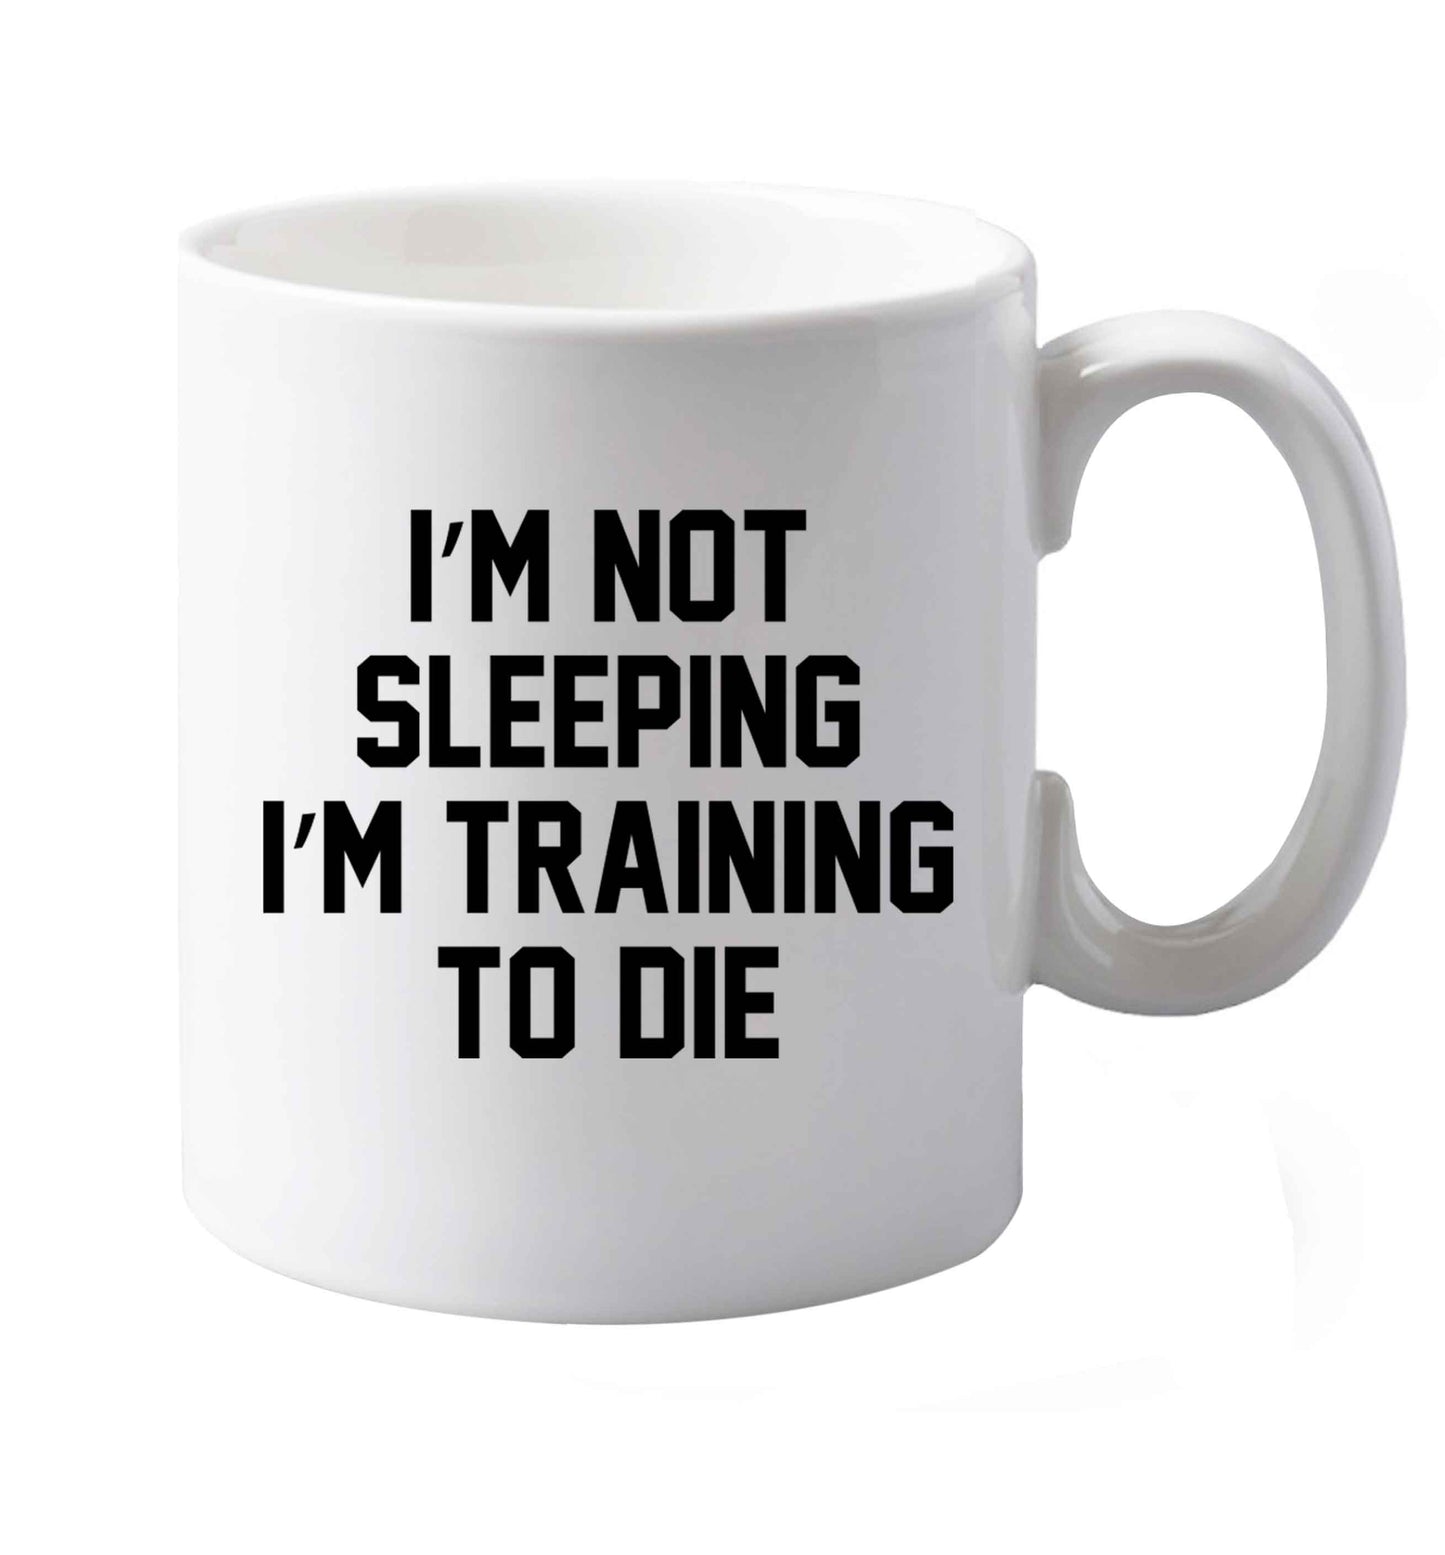 10 oz I'm not sleeping I'm training to die ceramic mug both sides